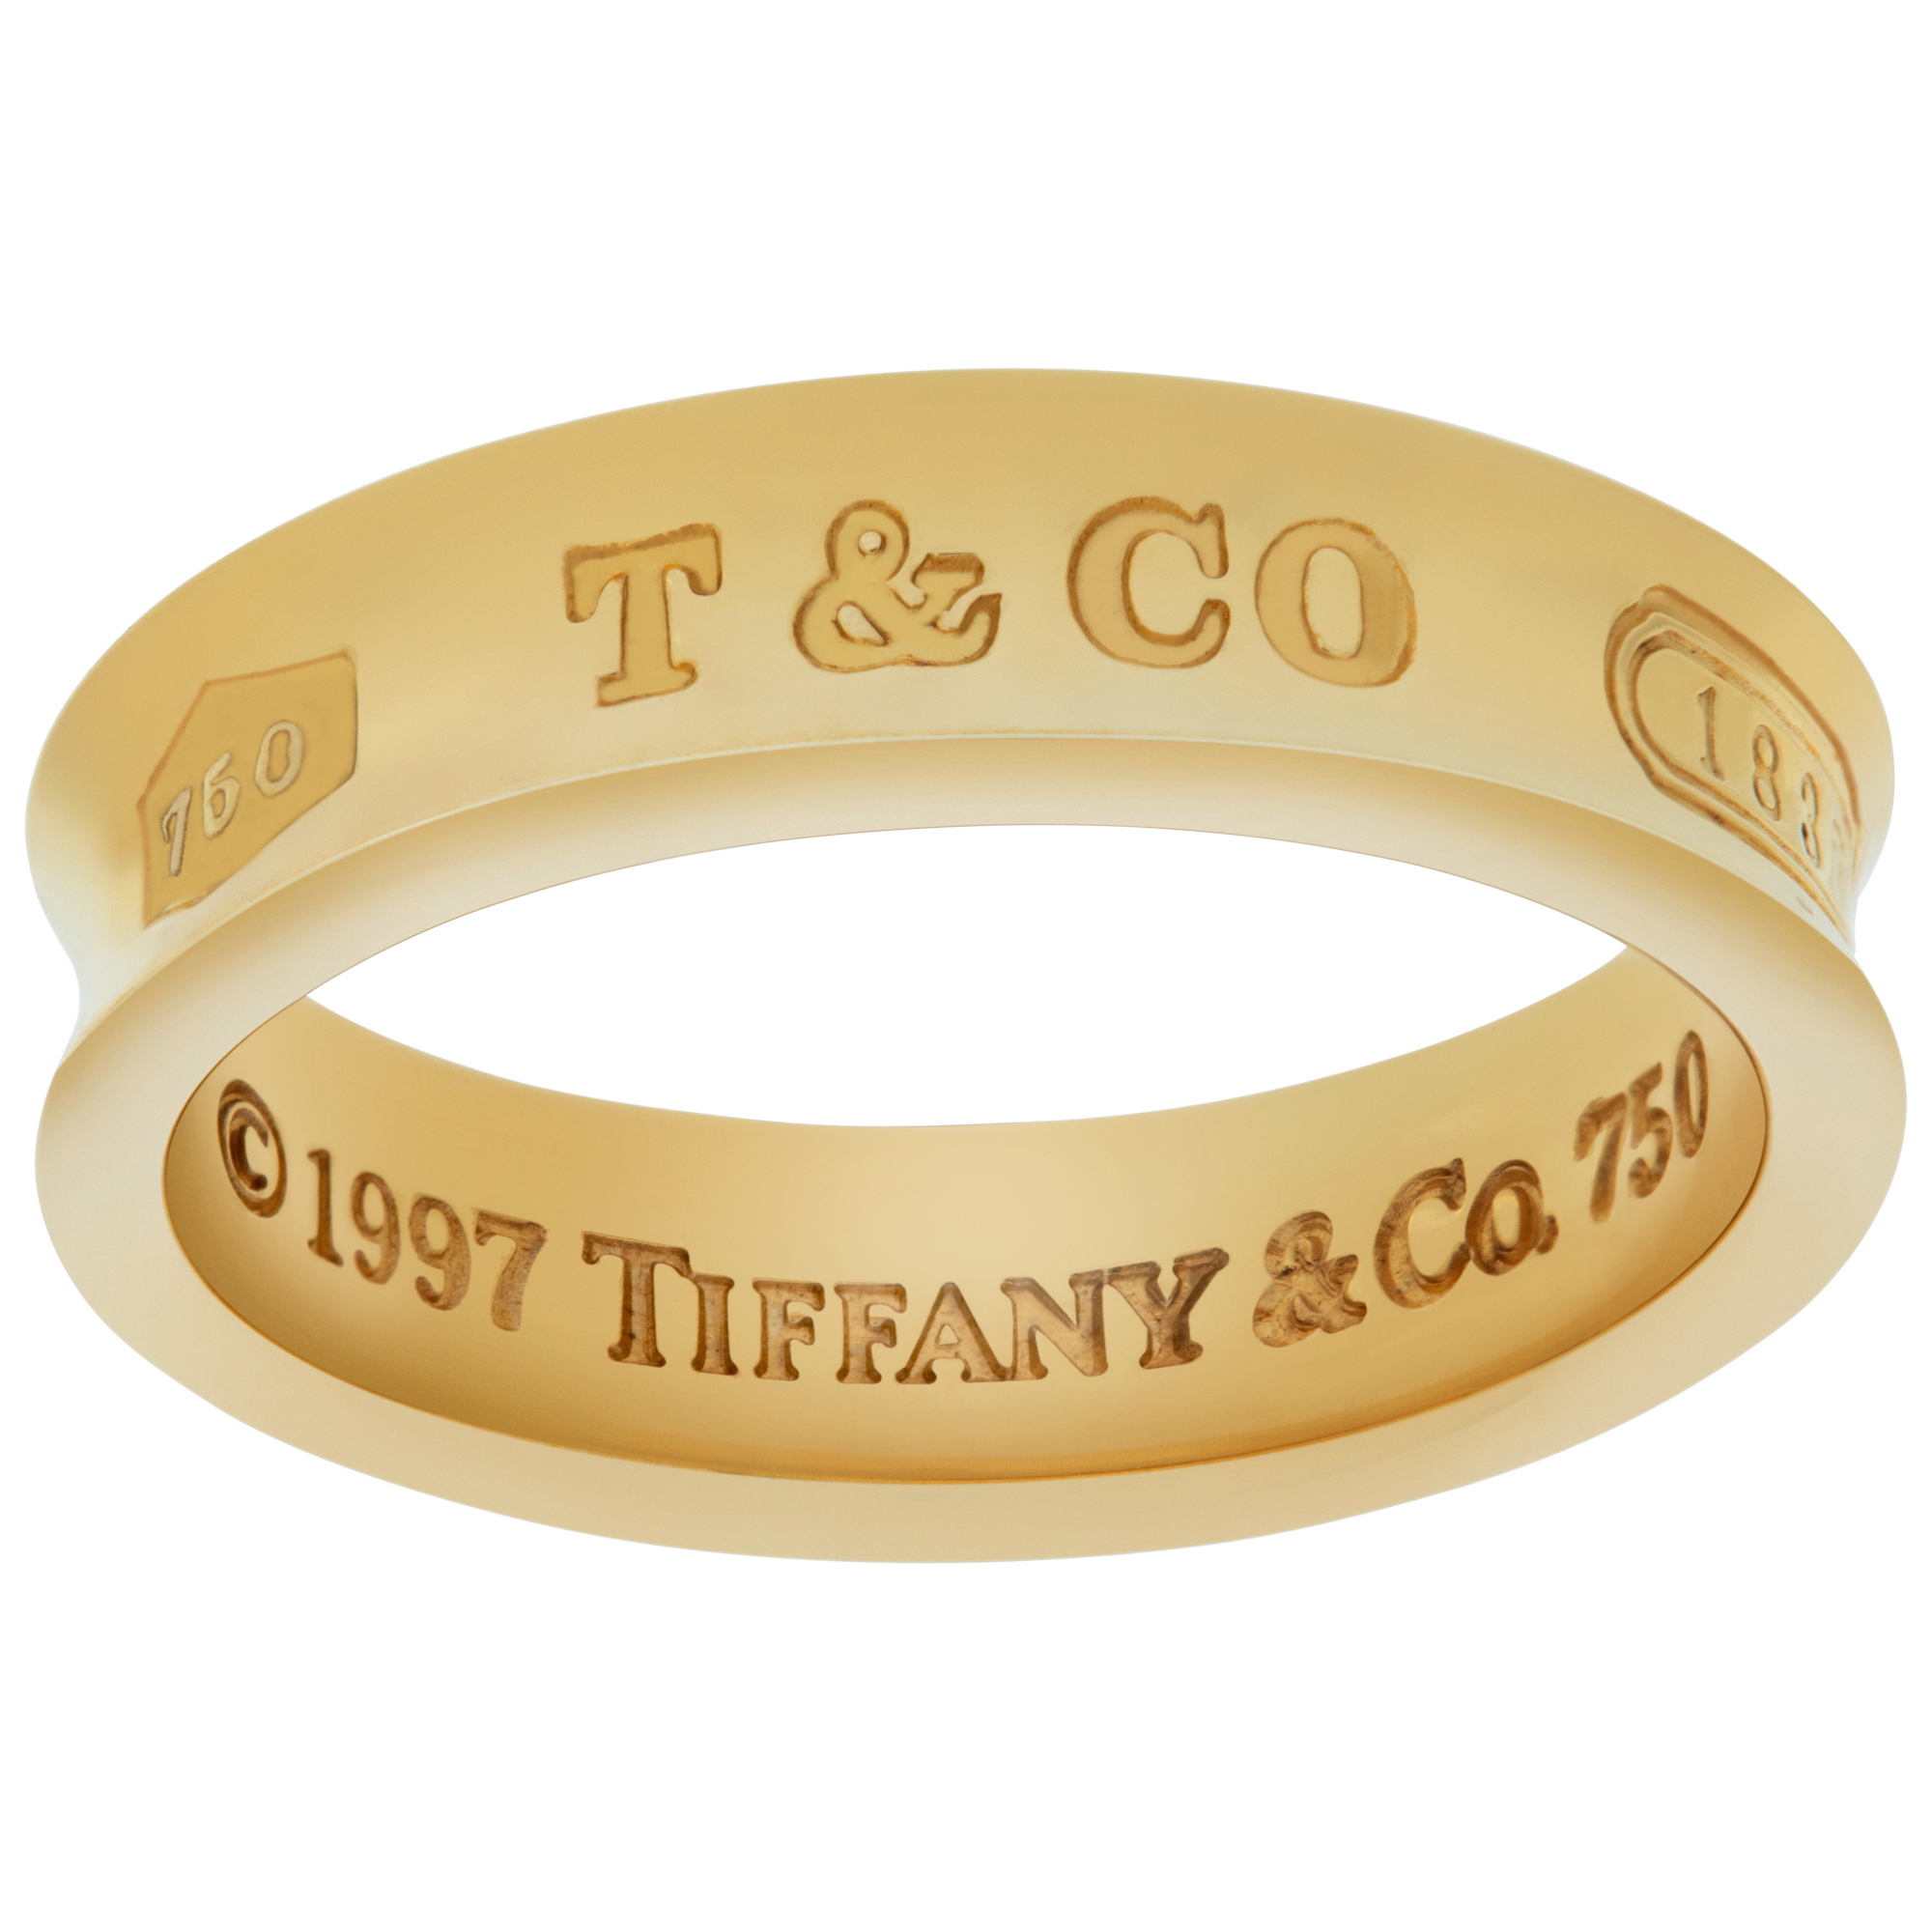 Tiffany & Co. wedding band 1837 anniversary band image 1